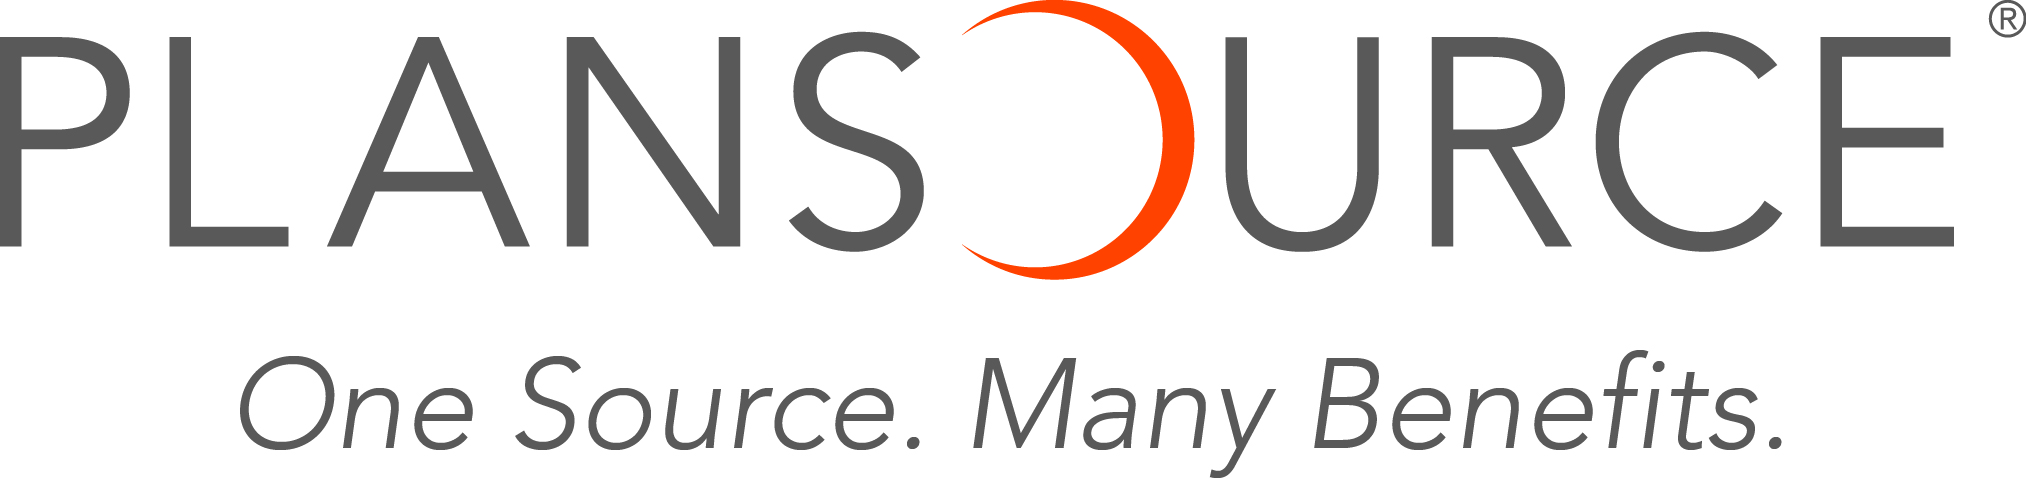 PlanSource_Logo.jpg